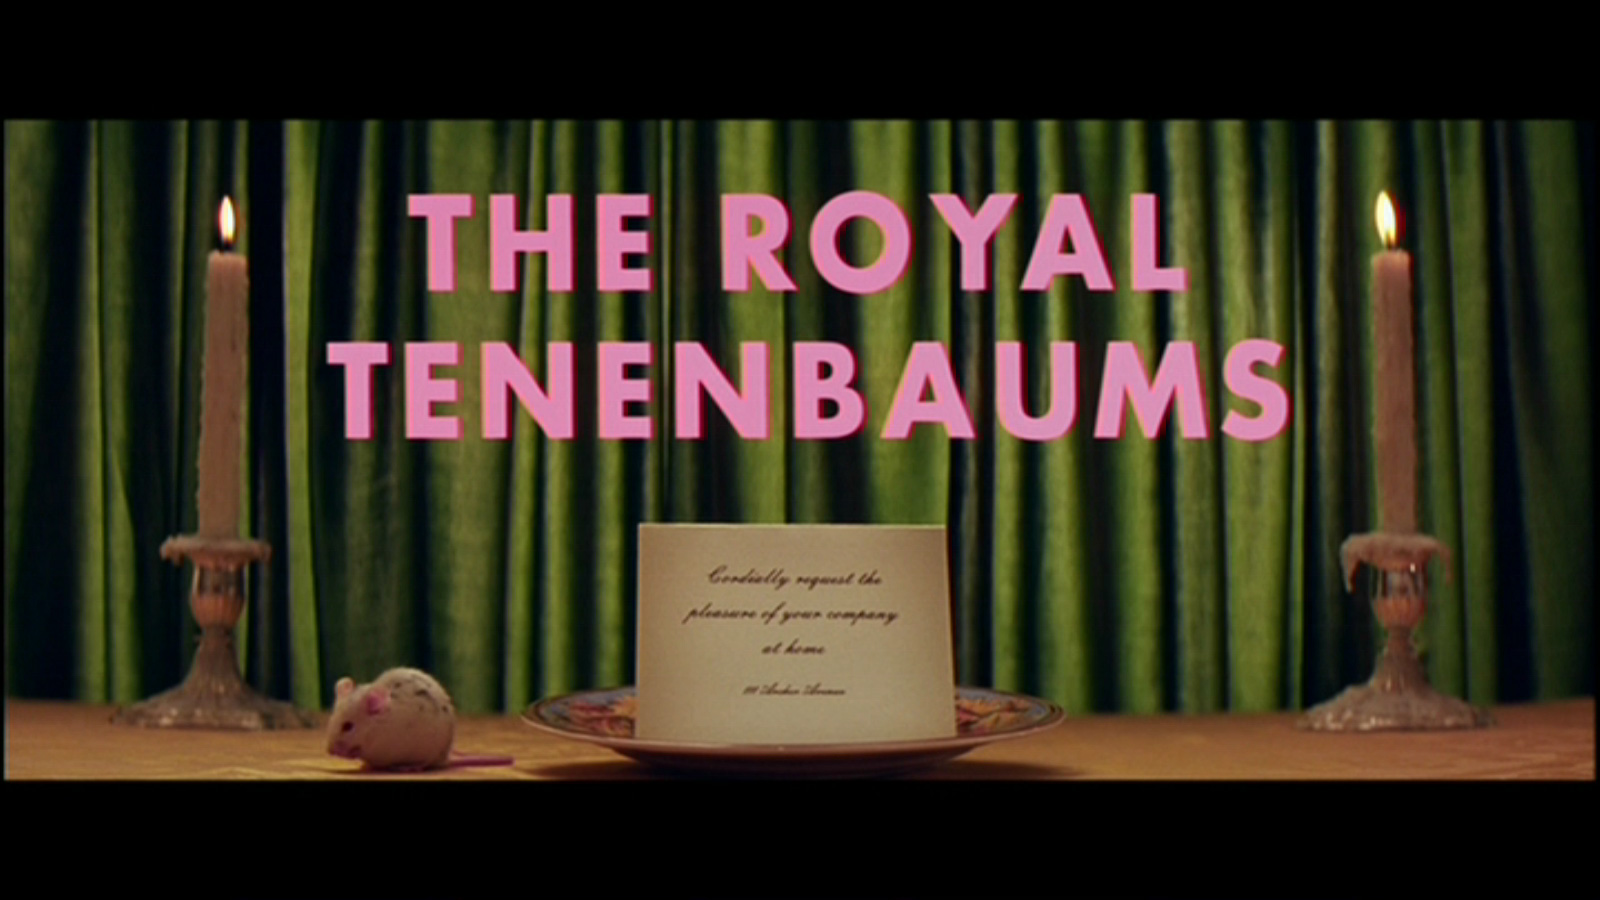 The Royal Tenenbaums movies in Bulgaria